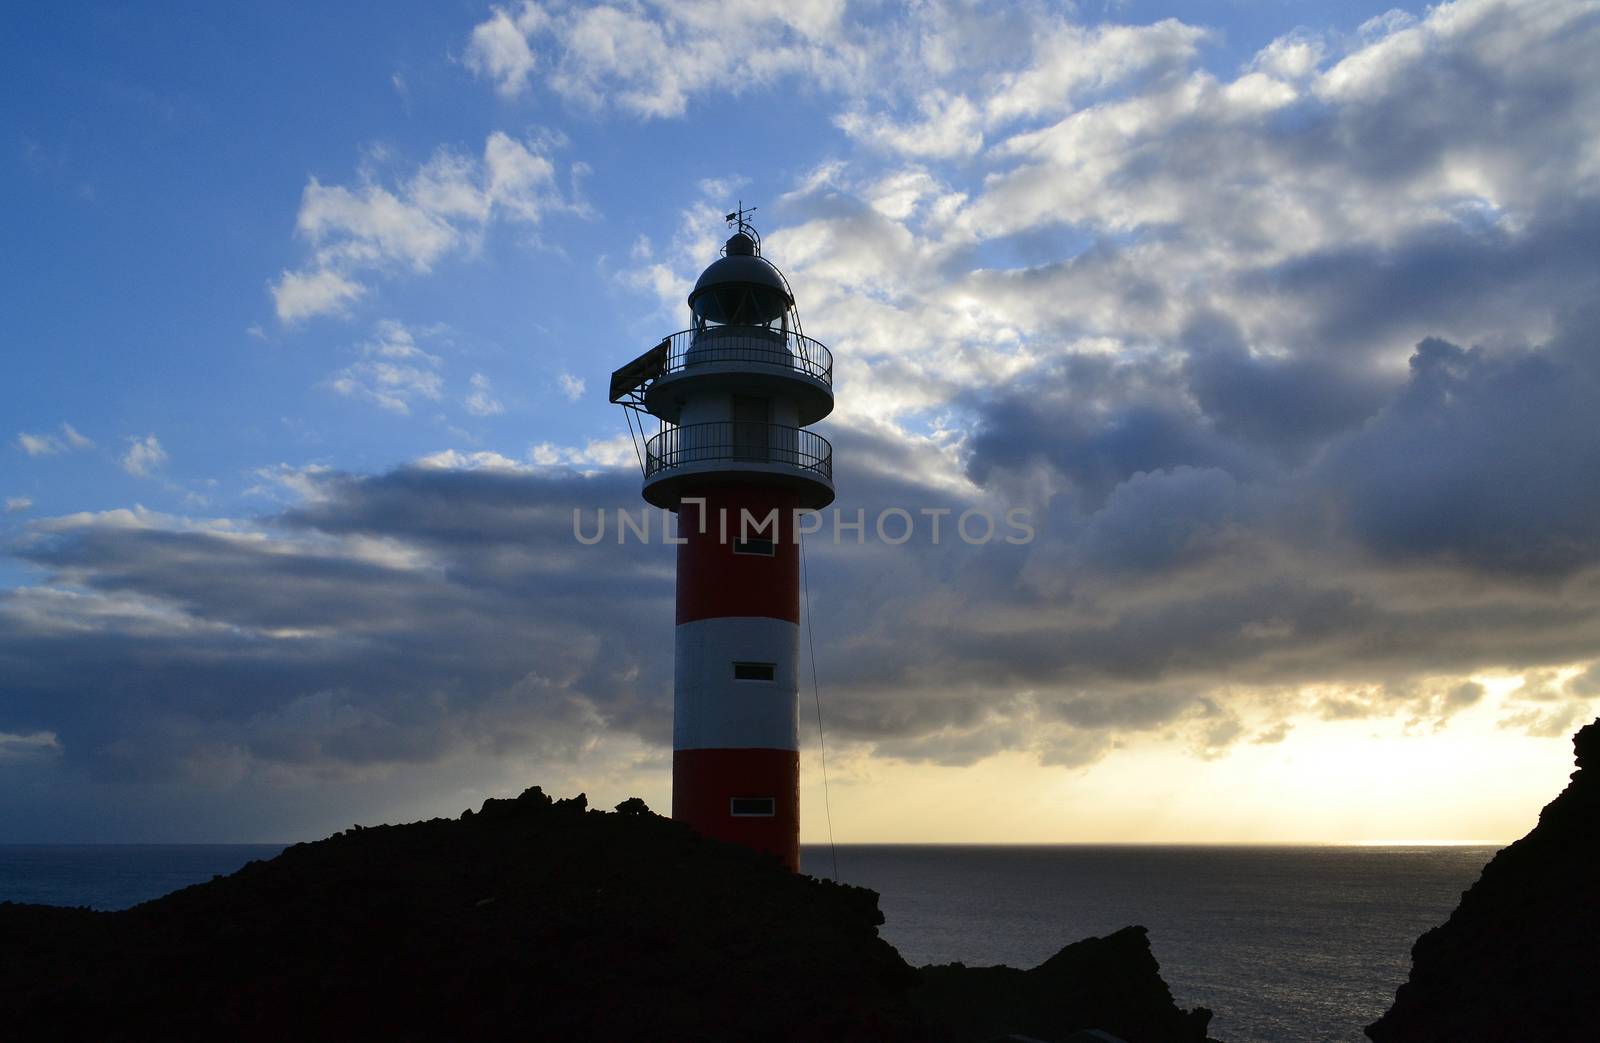 Lighthouse on sunset, Tenerife, Canary Islands by hibrida13